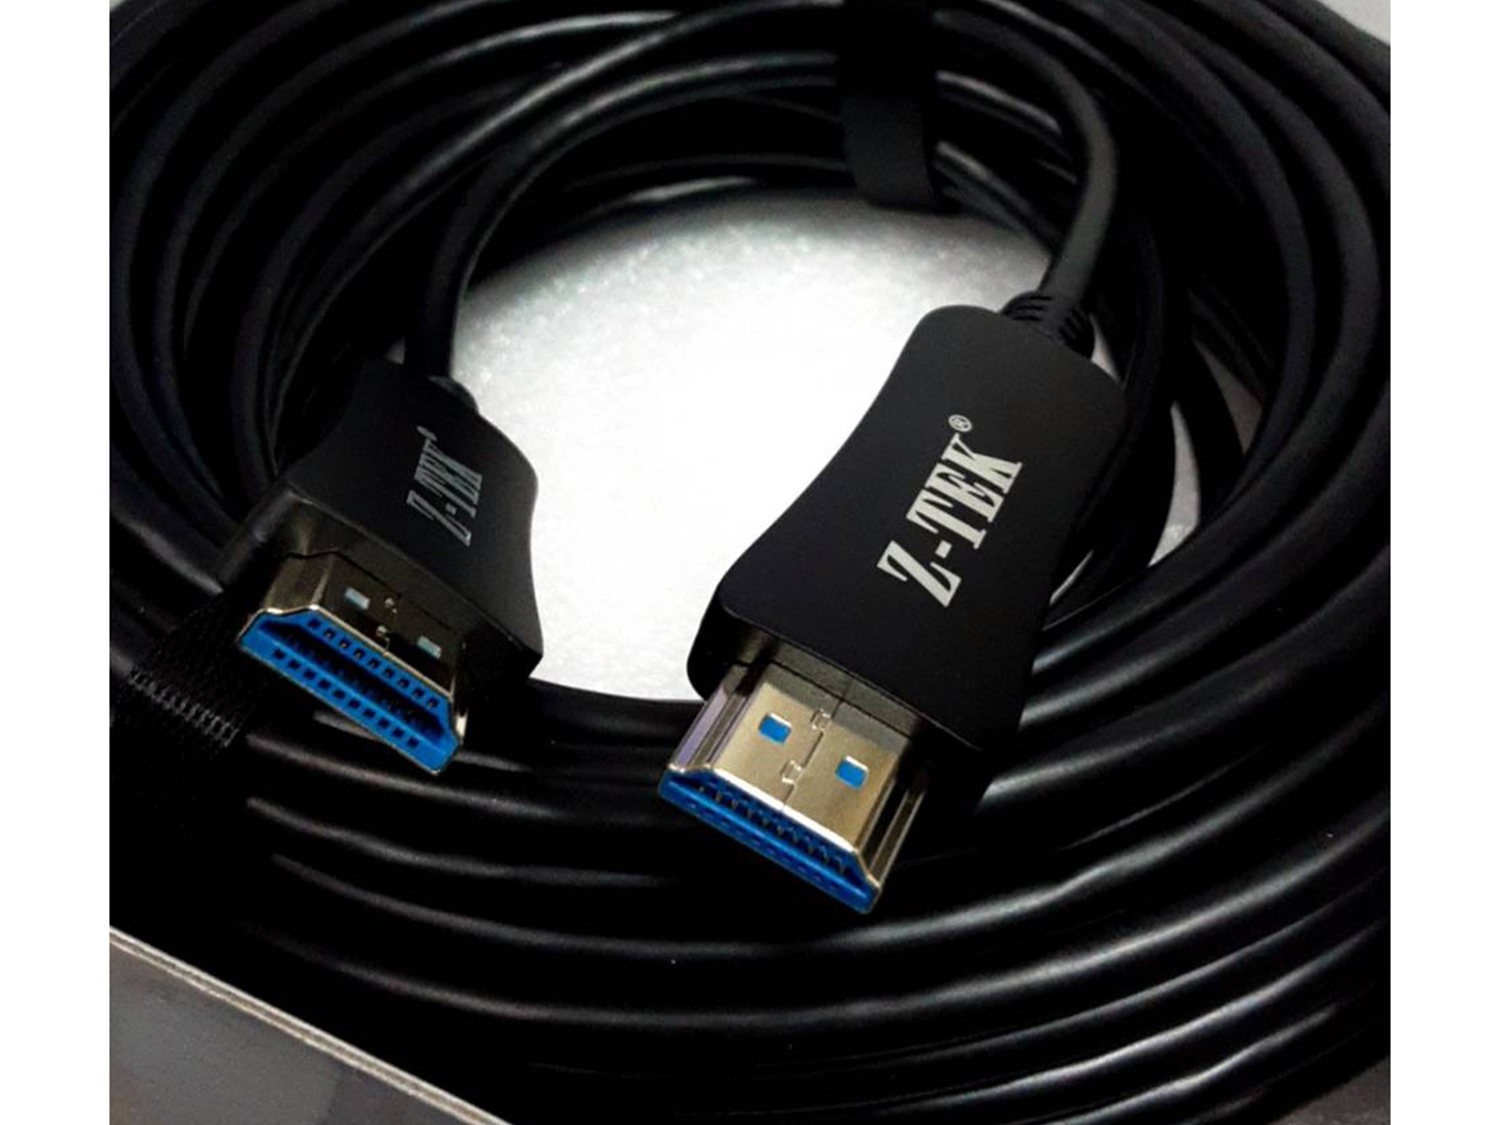 Fiber Hdmi 10M cable